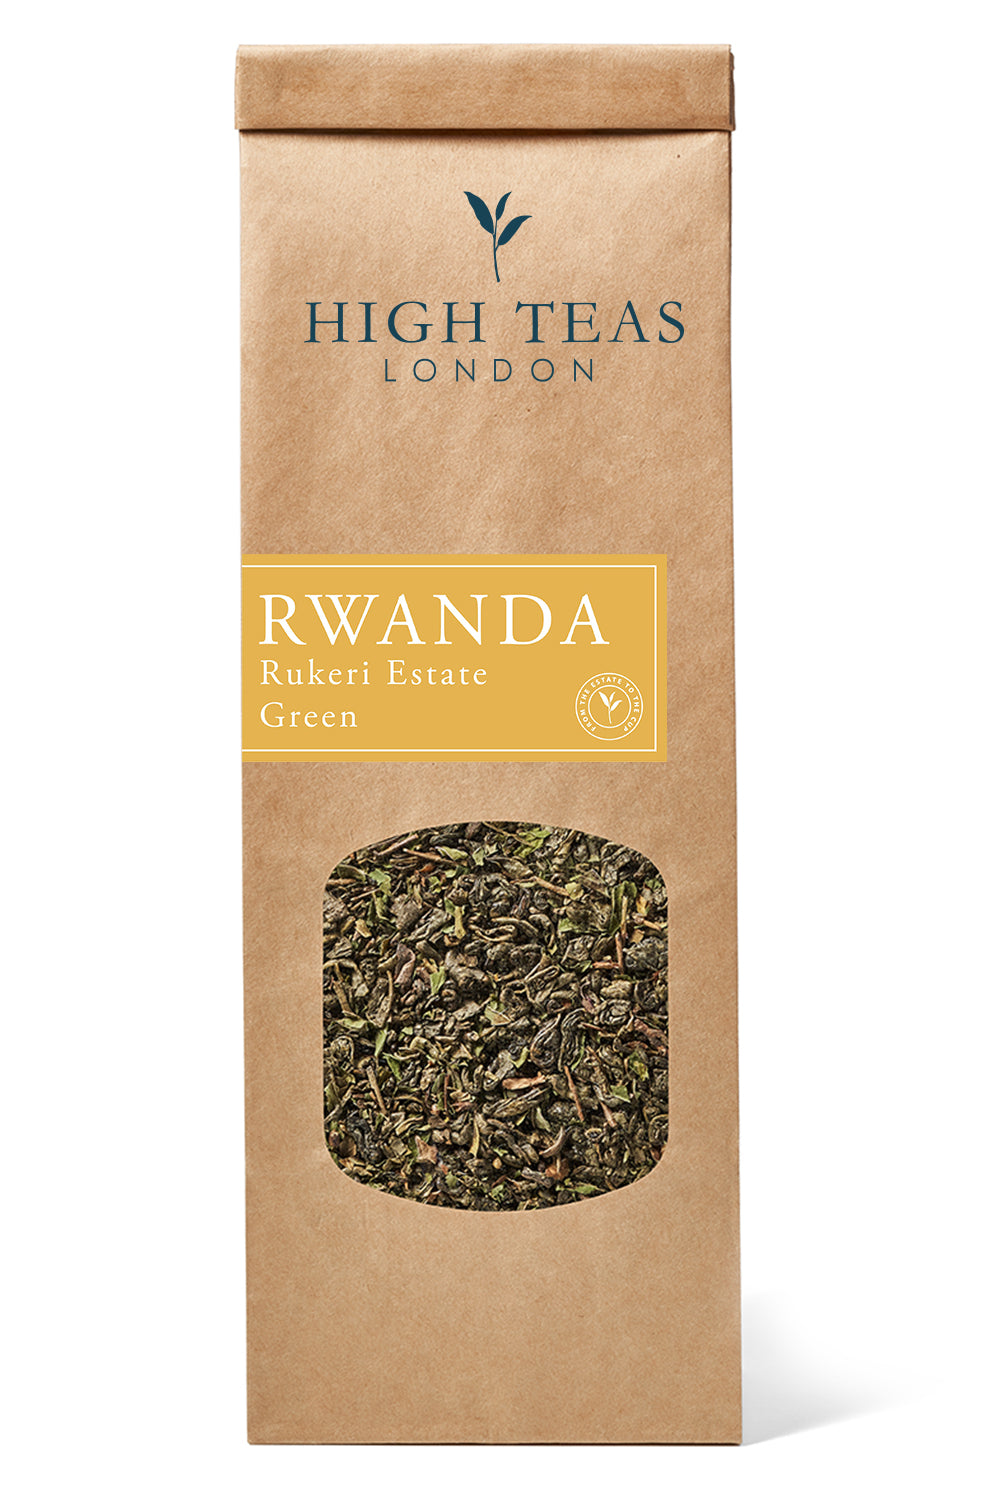 Rwanda - Rukeri Estate Green, OP (Orthodox)-50g-Loose Leaf Tea-High Teas